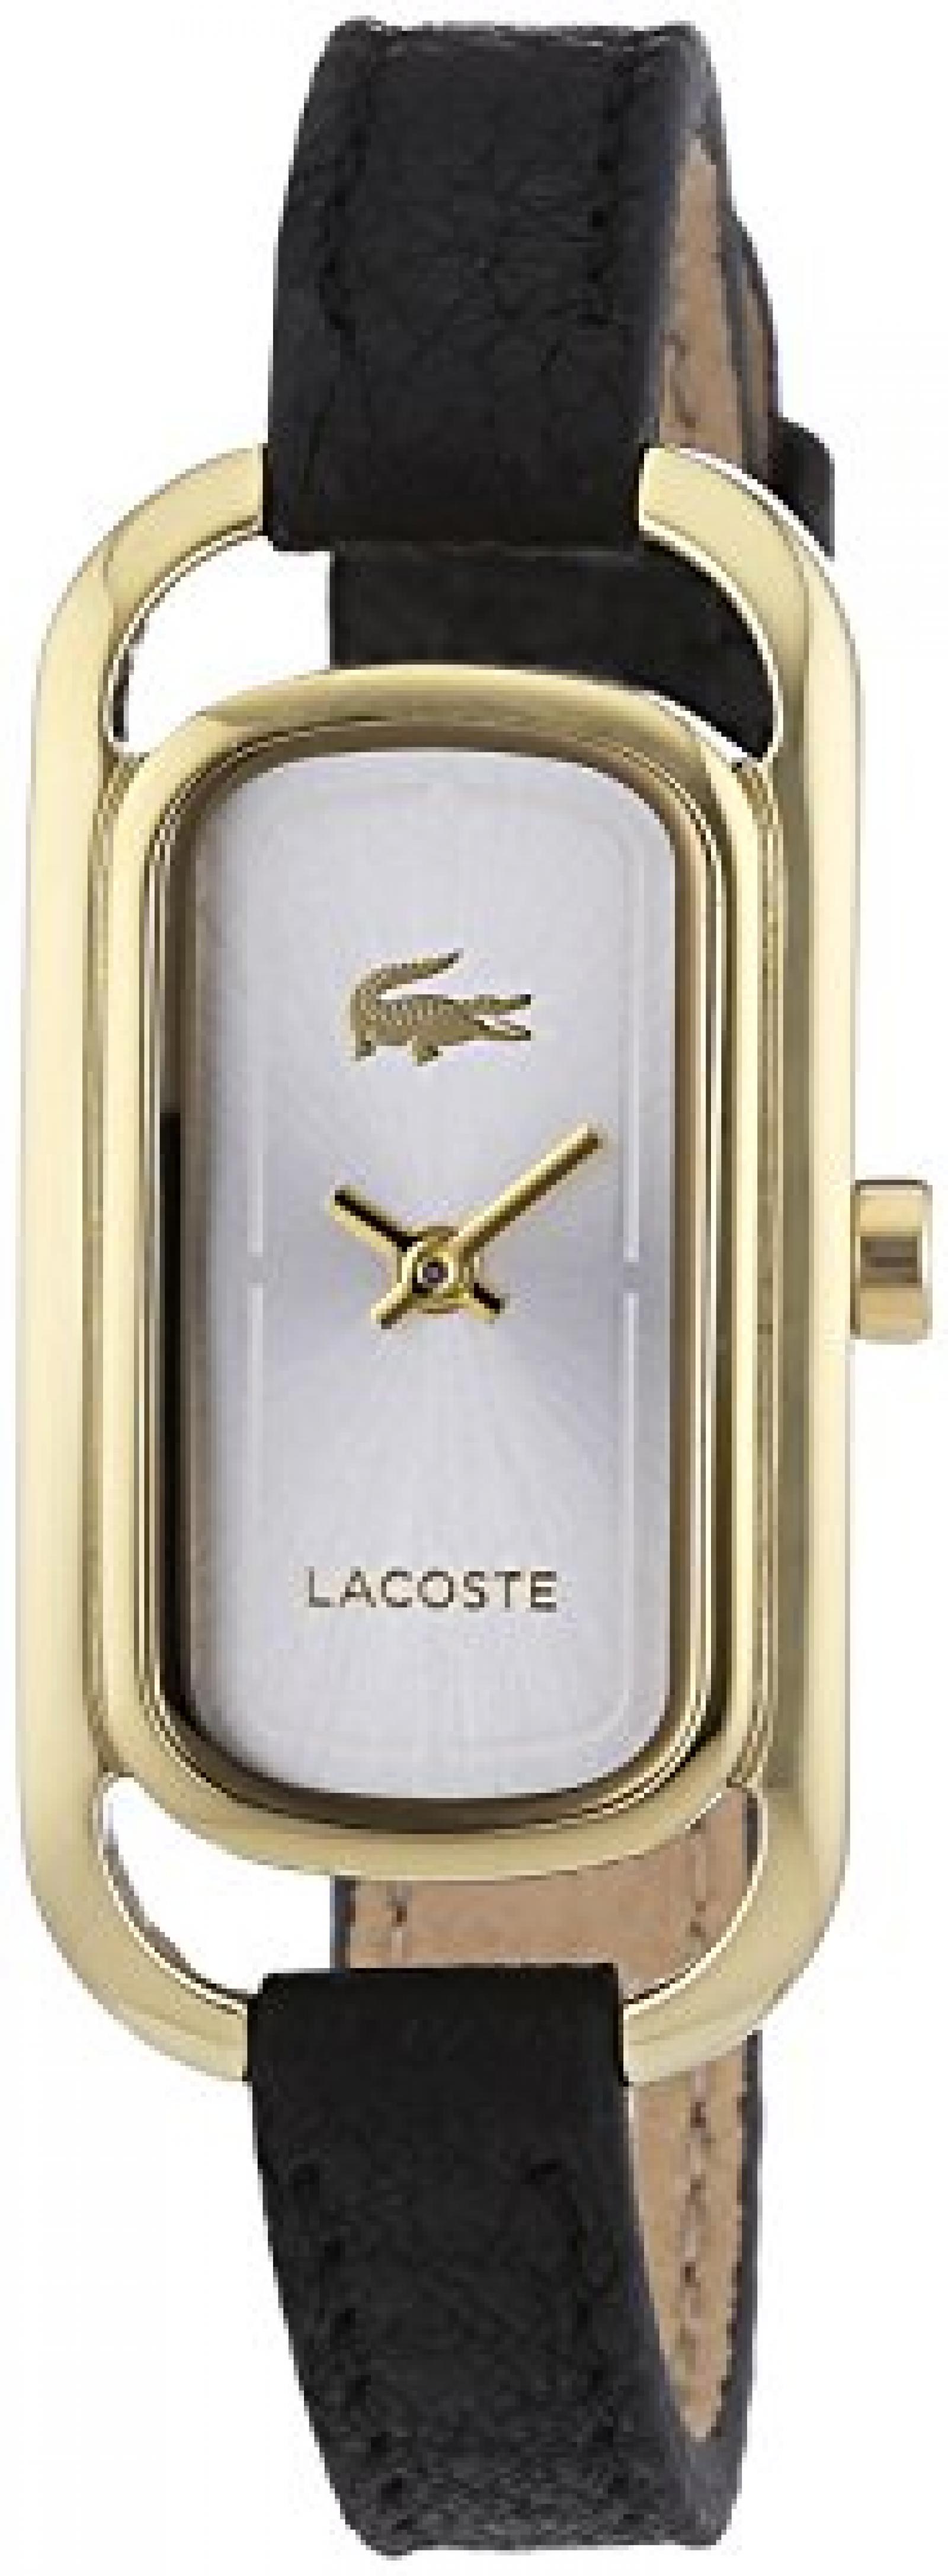 Lacoste Damen-Armbanduhr SIENNA Analog Quarz Leder 2000857 